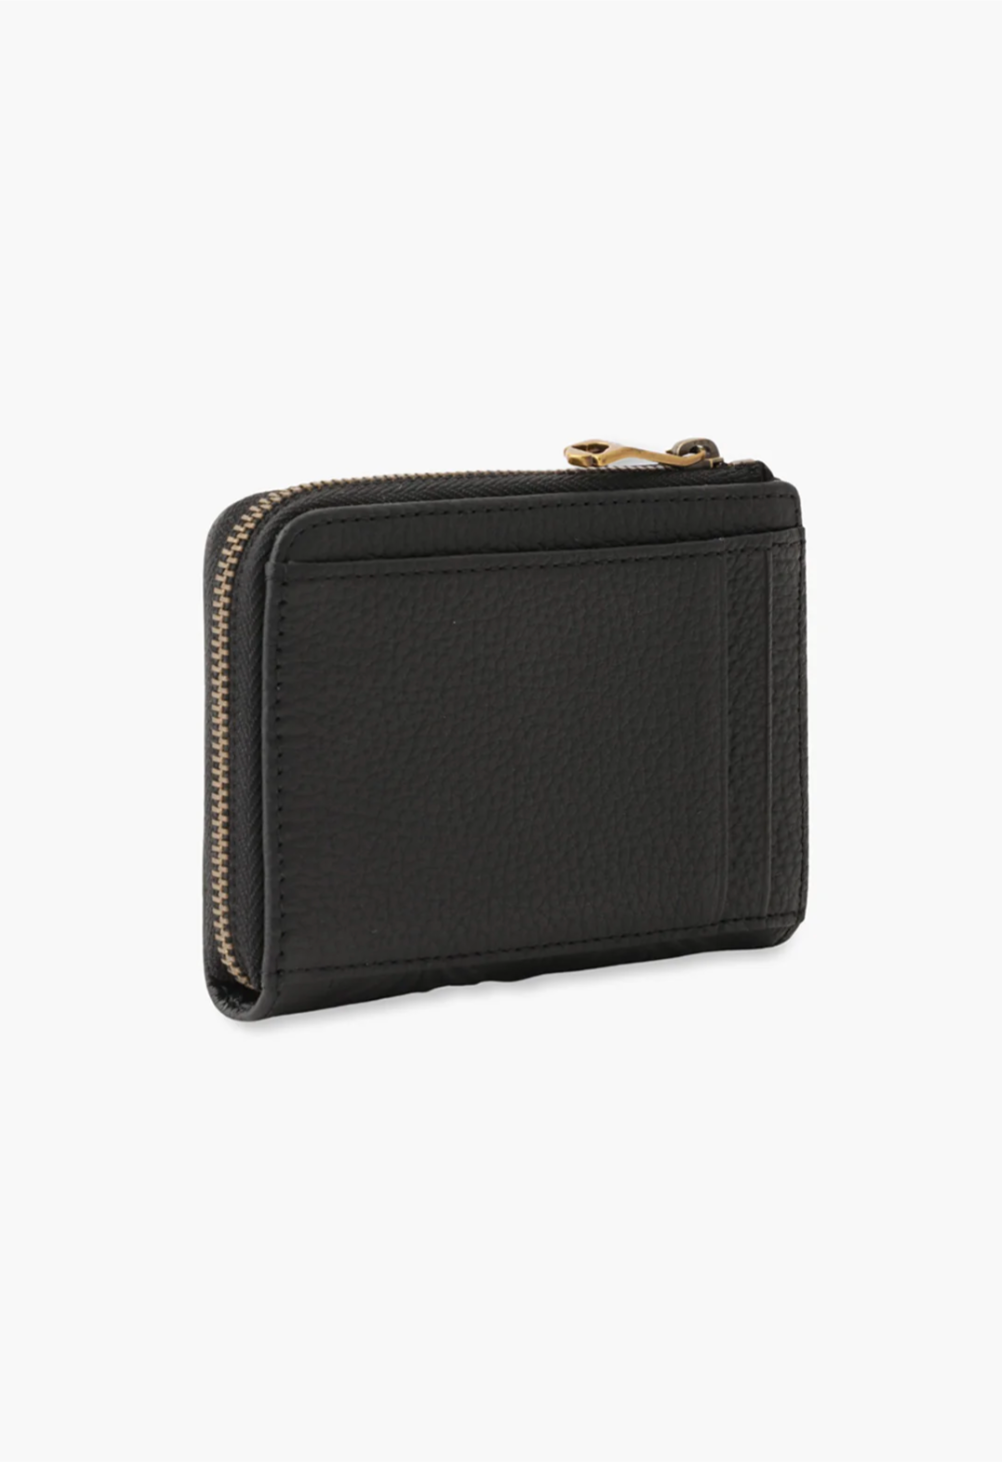 Nova Small Wallet black Mini matte leather wallet, zipper closure, large stiches.